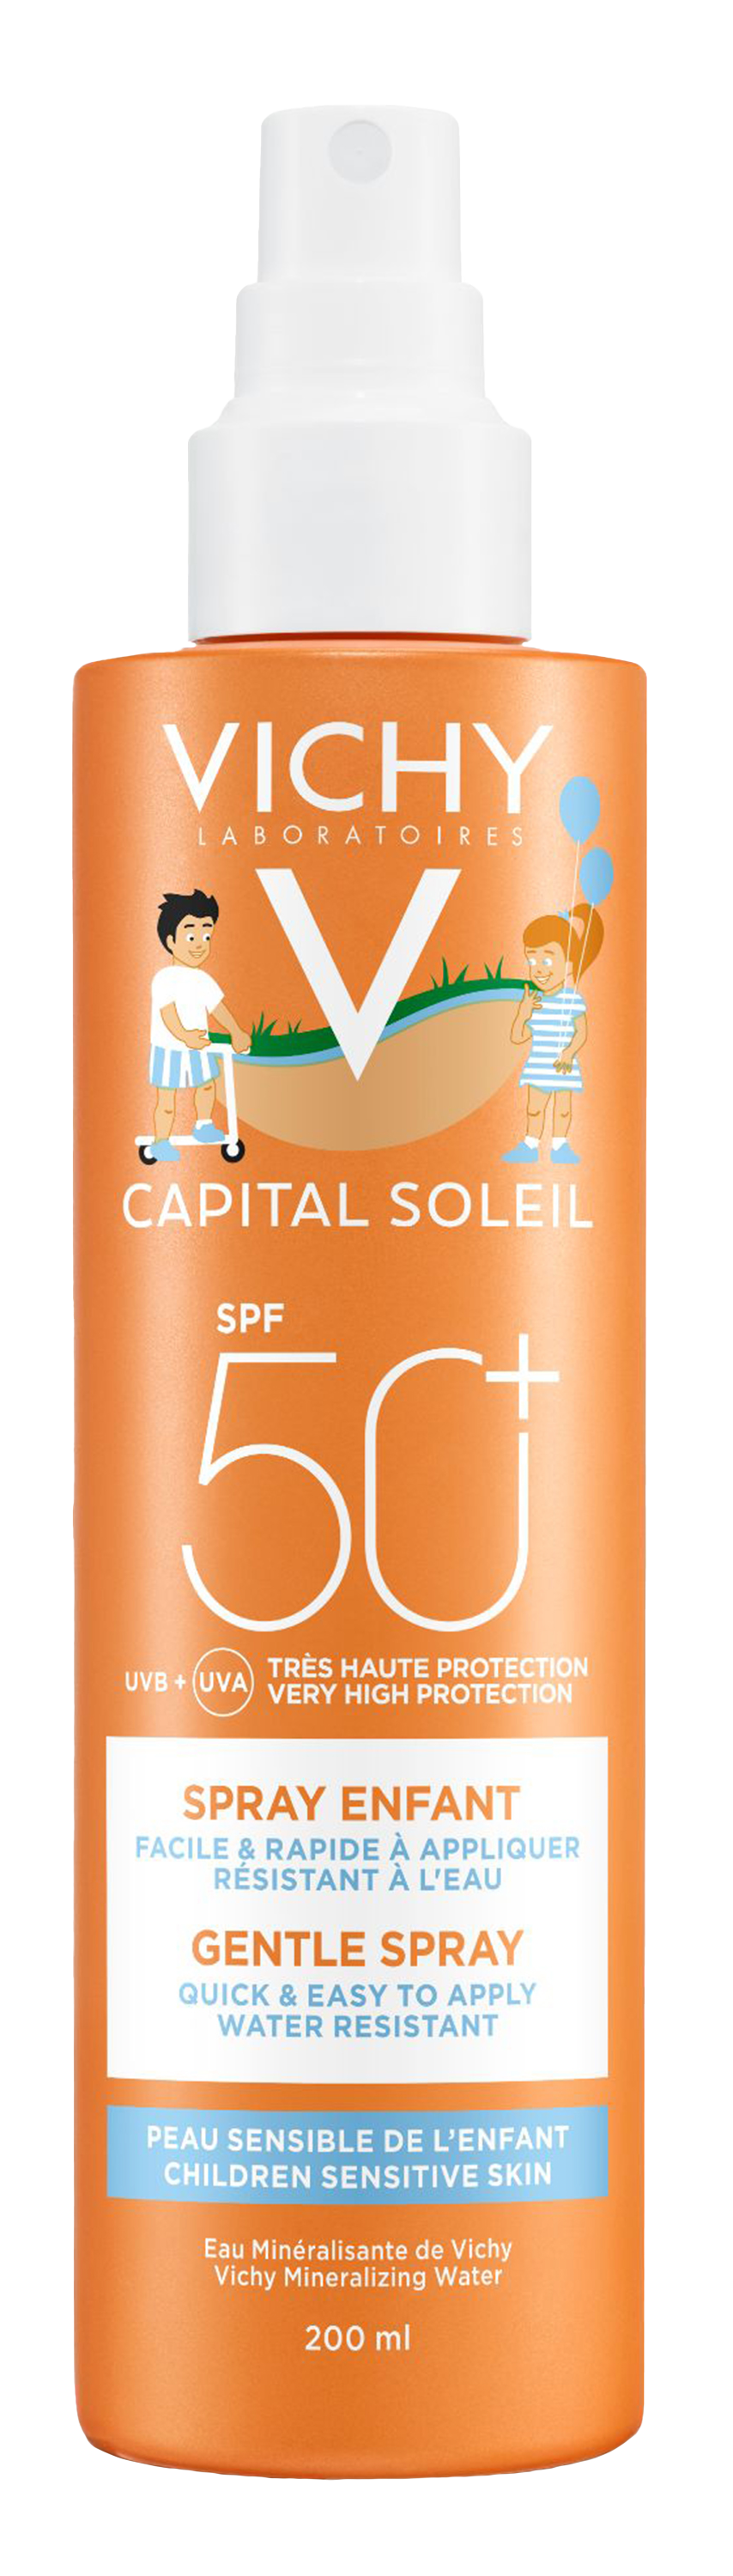 Vichy Capital Soleil Kids Gentle Spray, SPF 50+, 200 ml